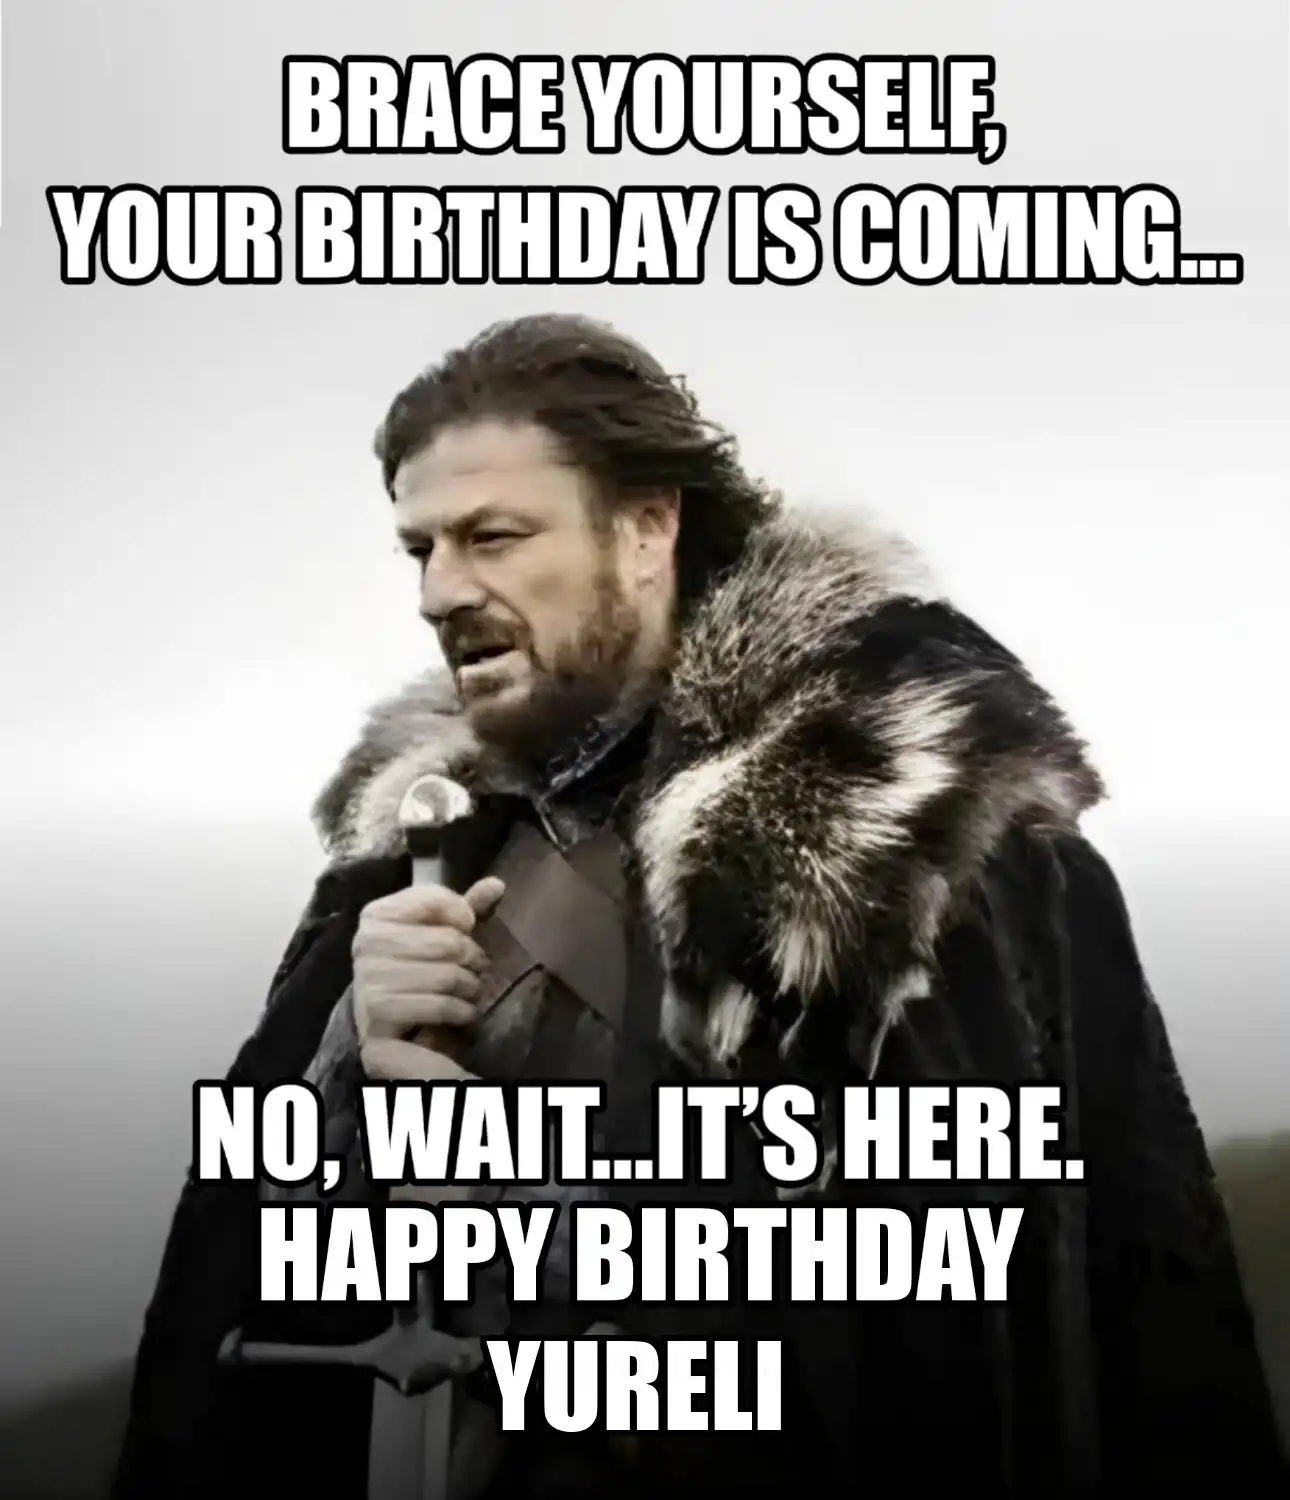 Happy Birthday Yureli Brace Yourself Your Birthday Is Coming Meme